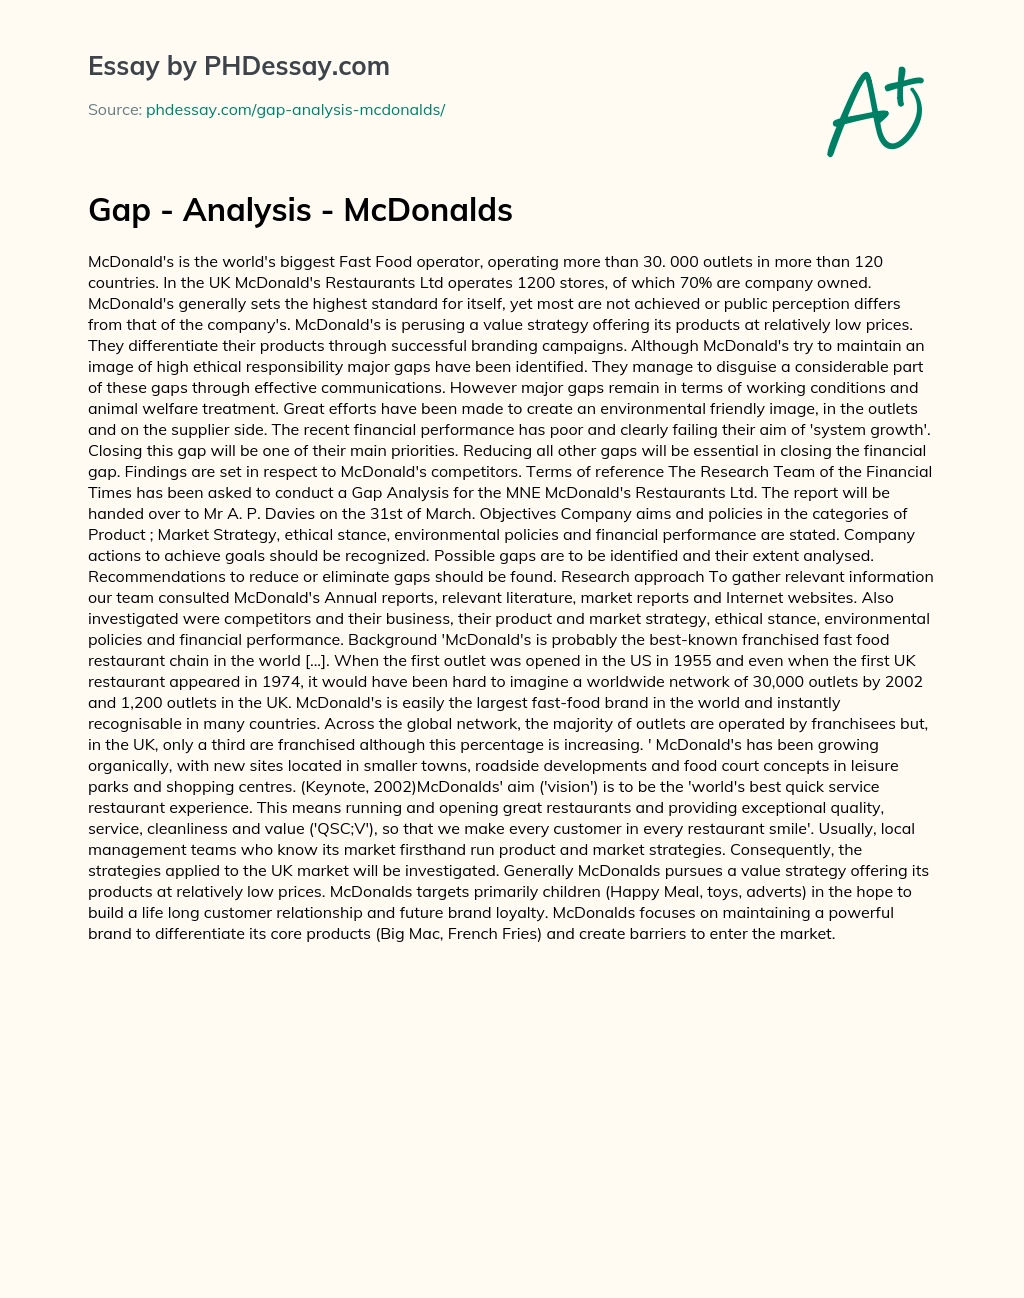 Gap – Analysis – McDonalds essay